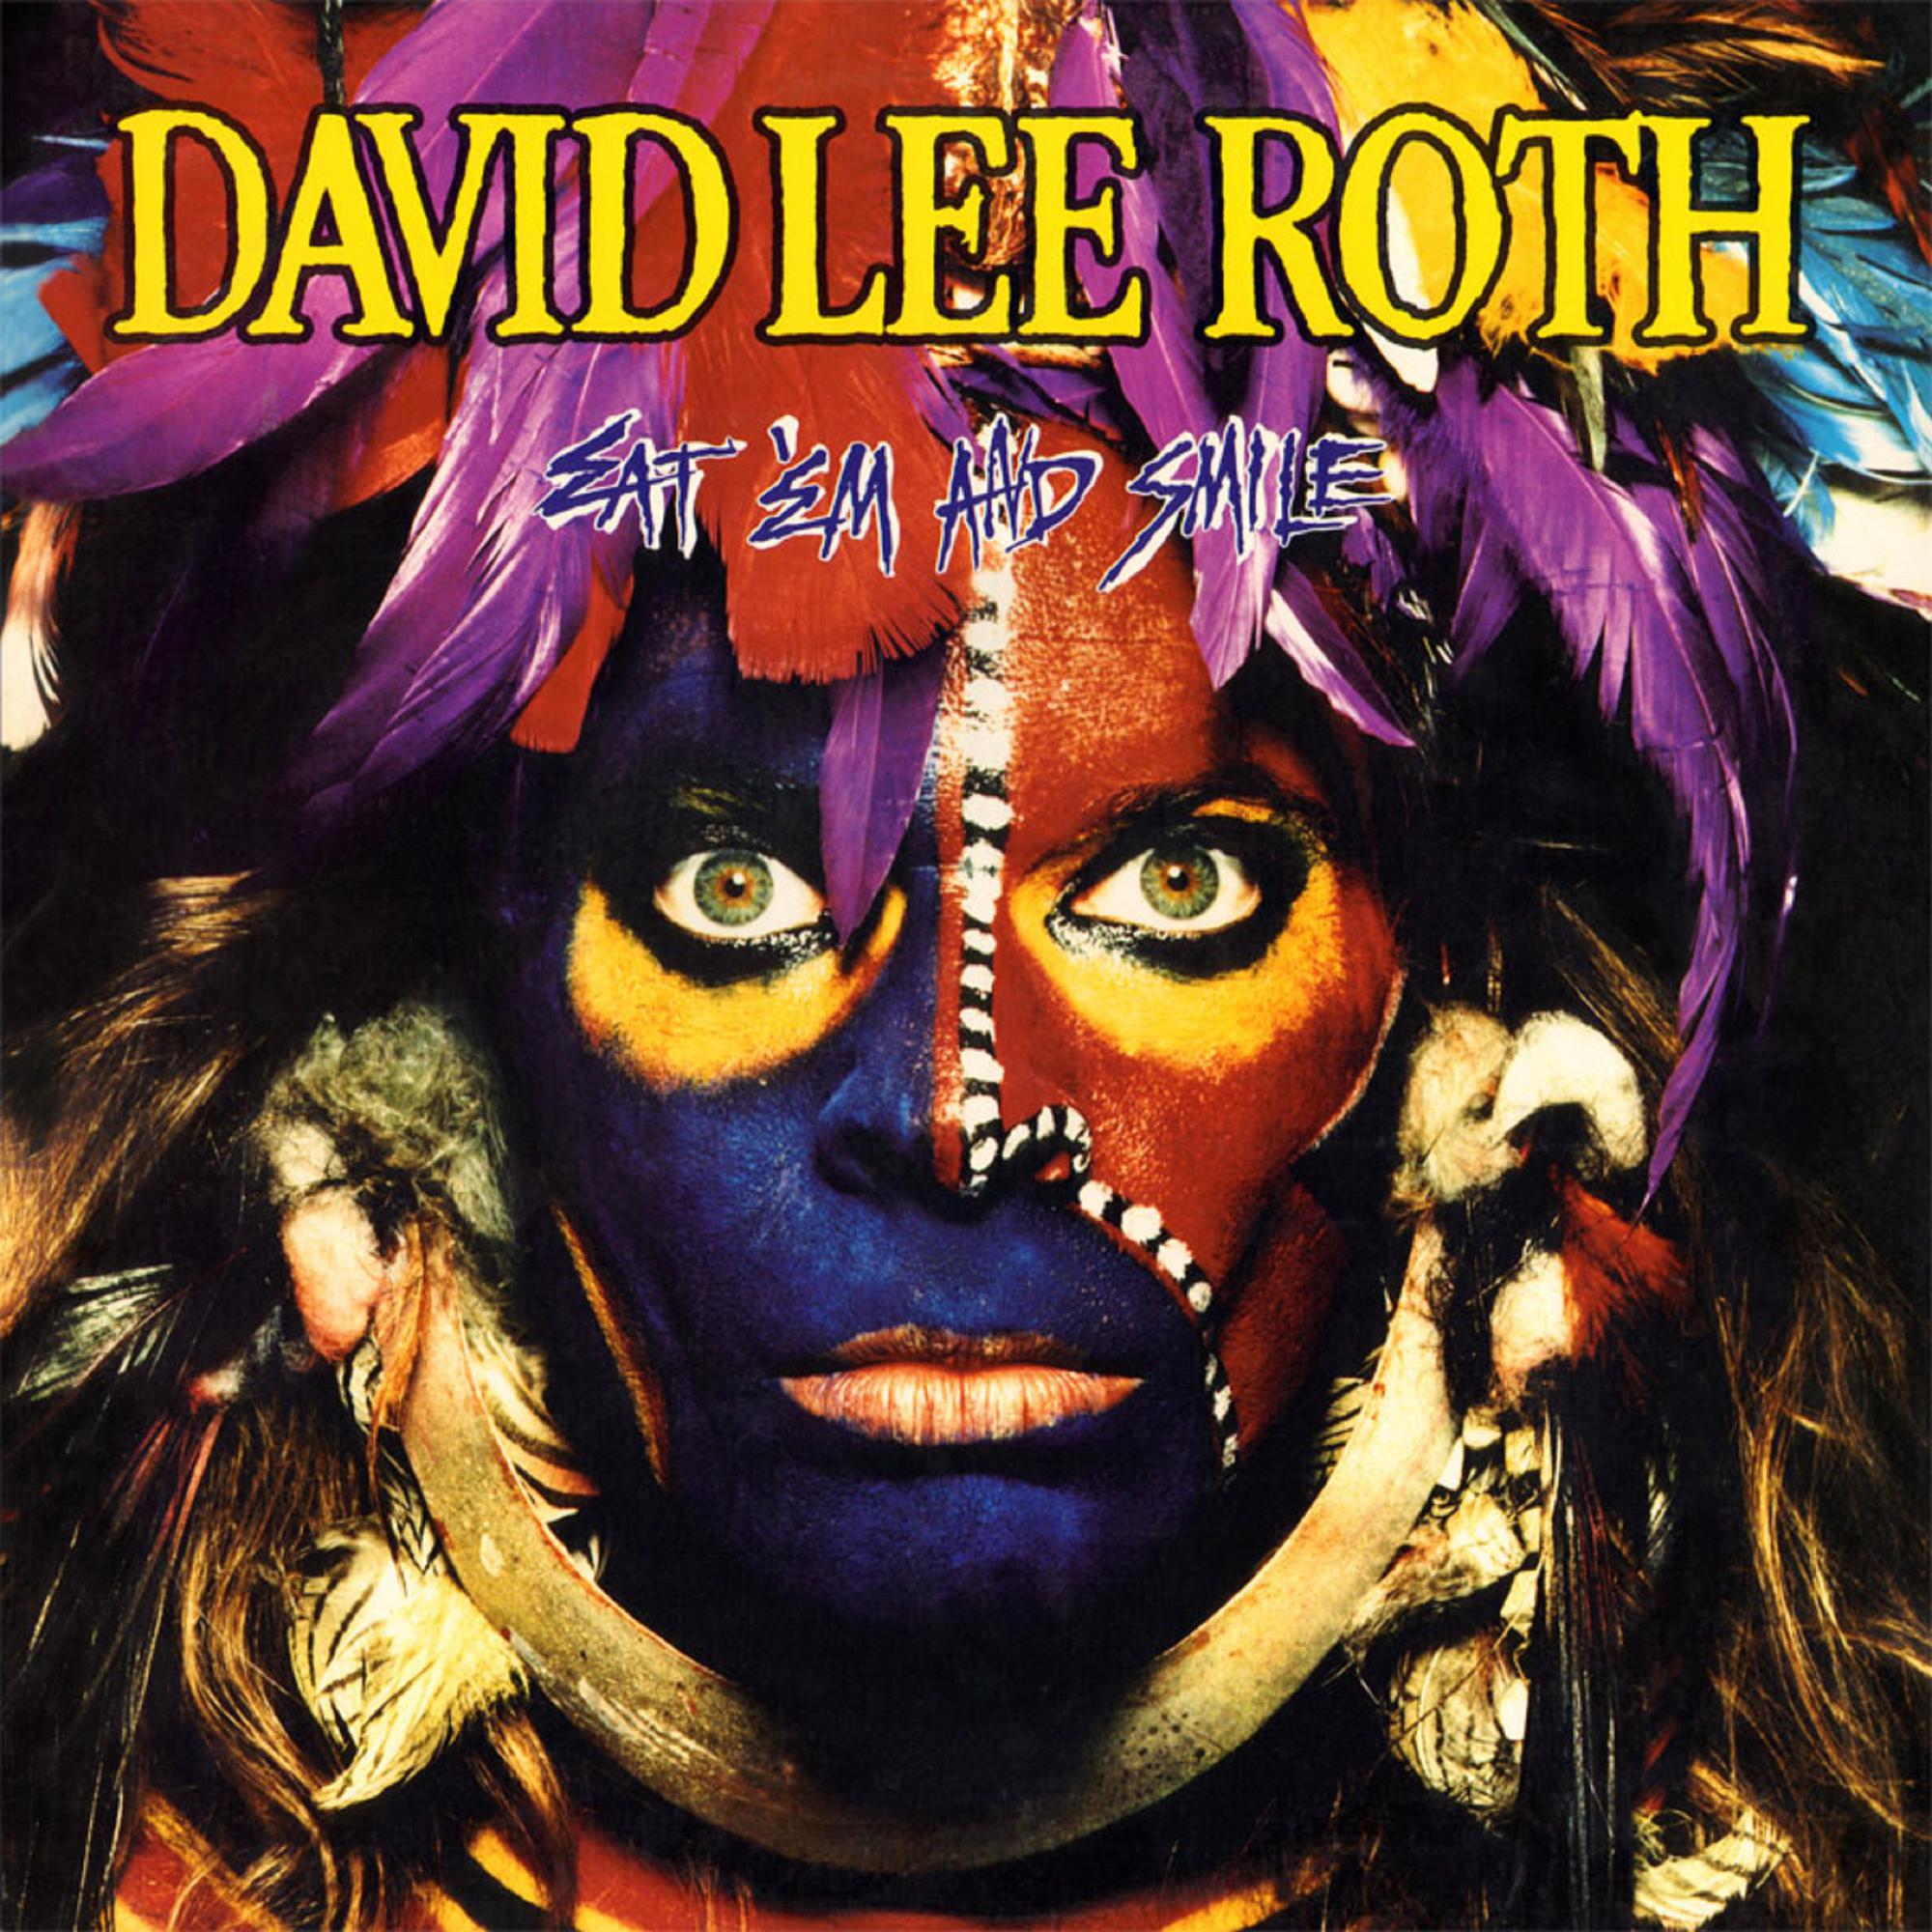 DAVID LEE ROTH 'EAT 'EM AND SMILE' LP